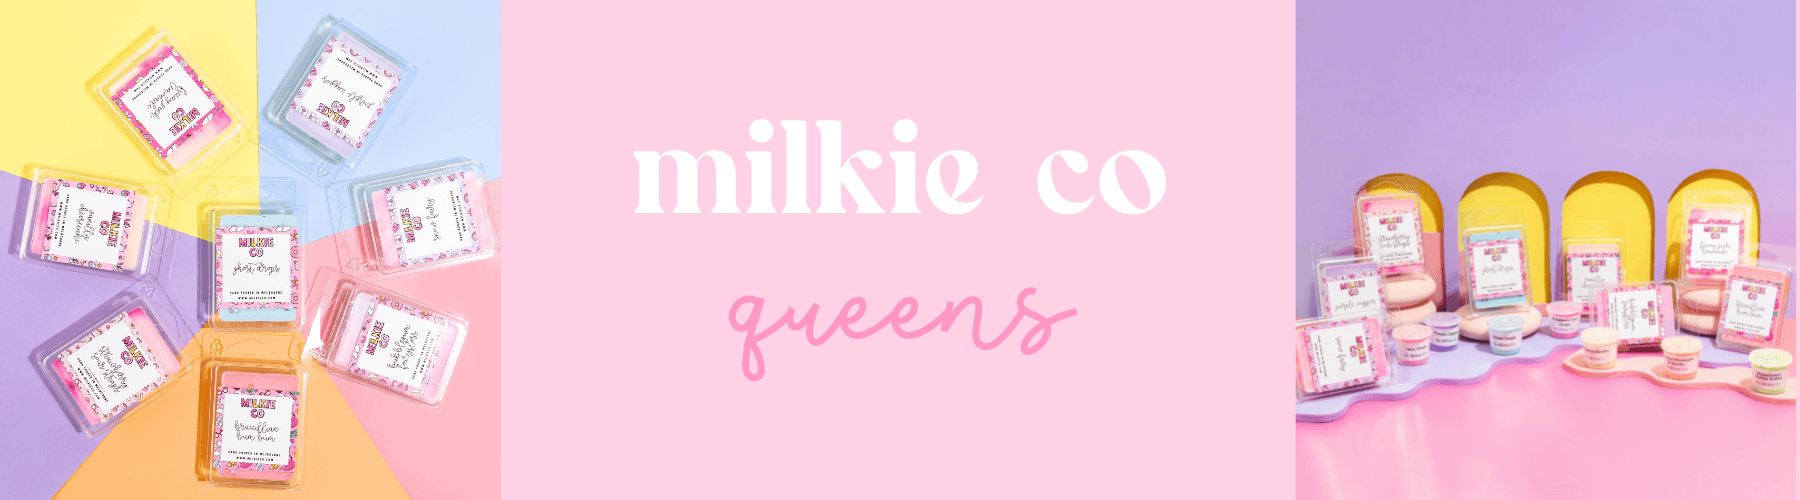 Milkie Co Queens - Customer VIP Group - Milkie Co